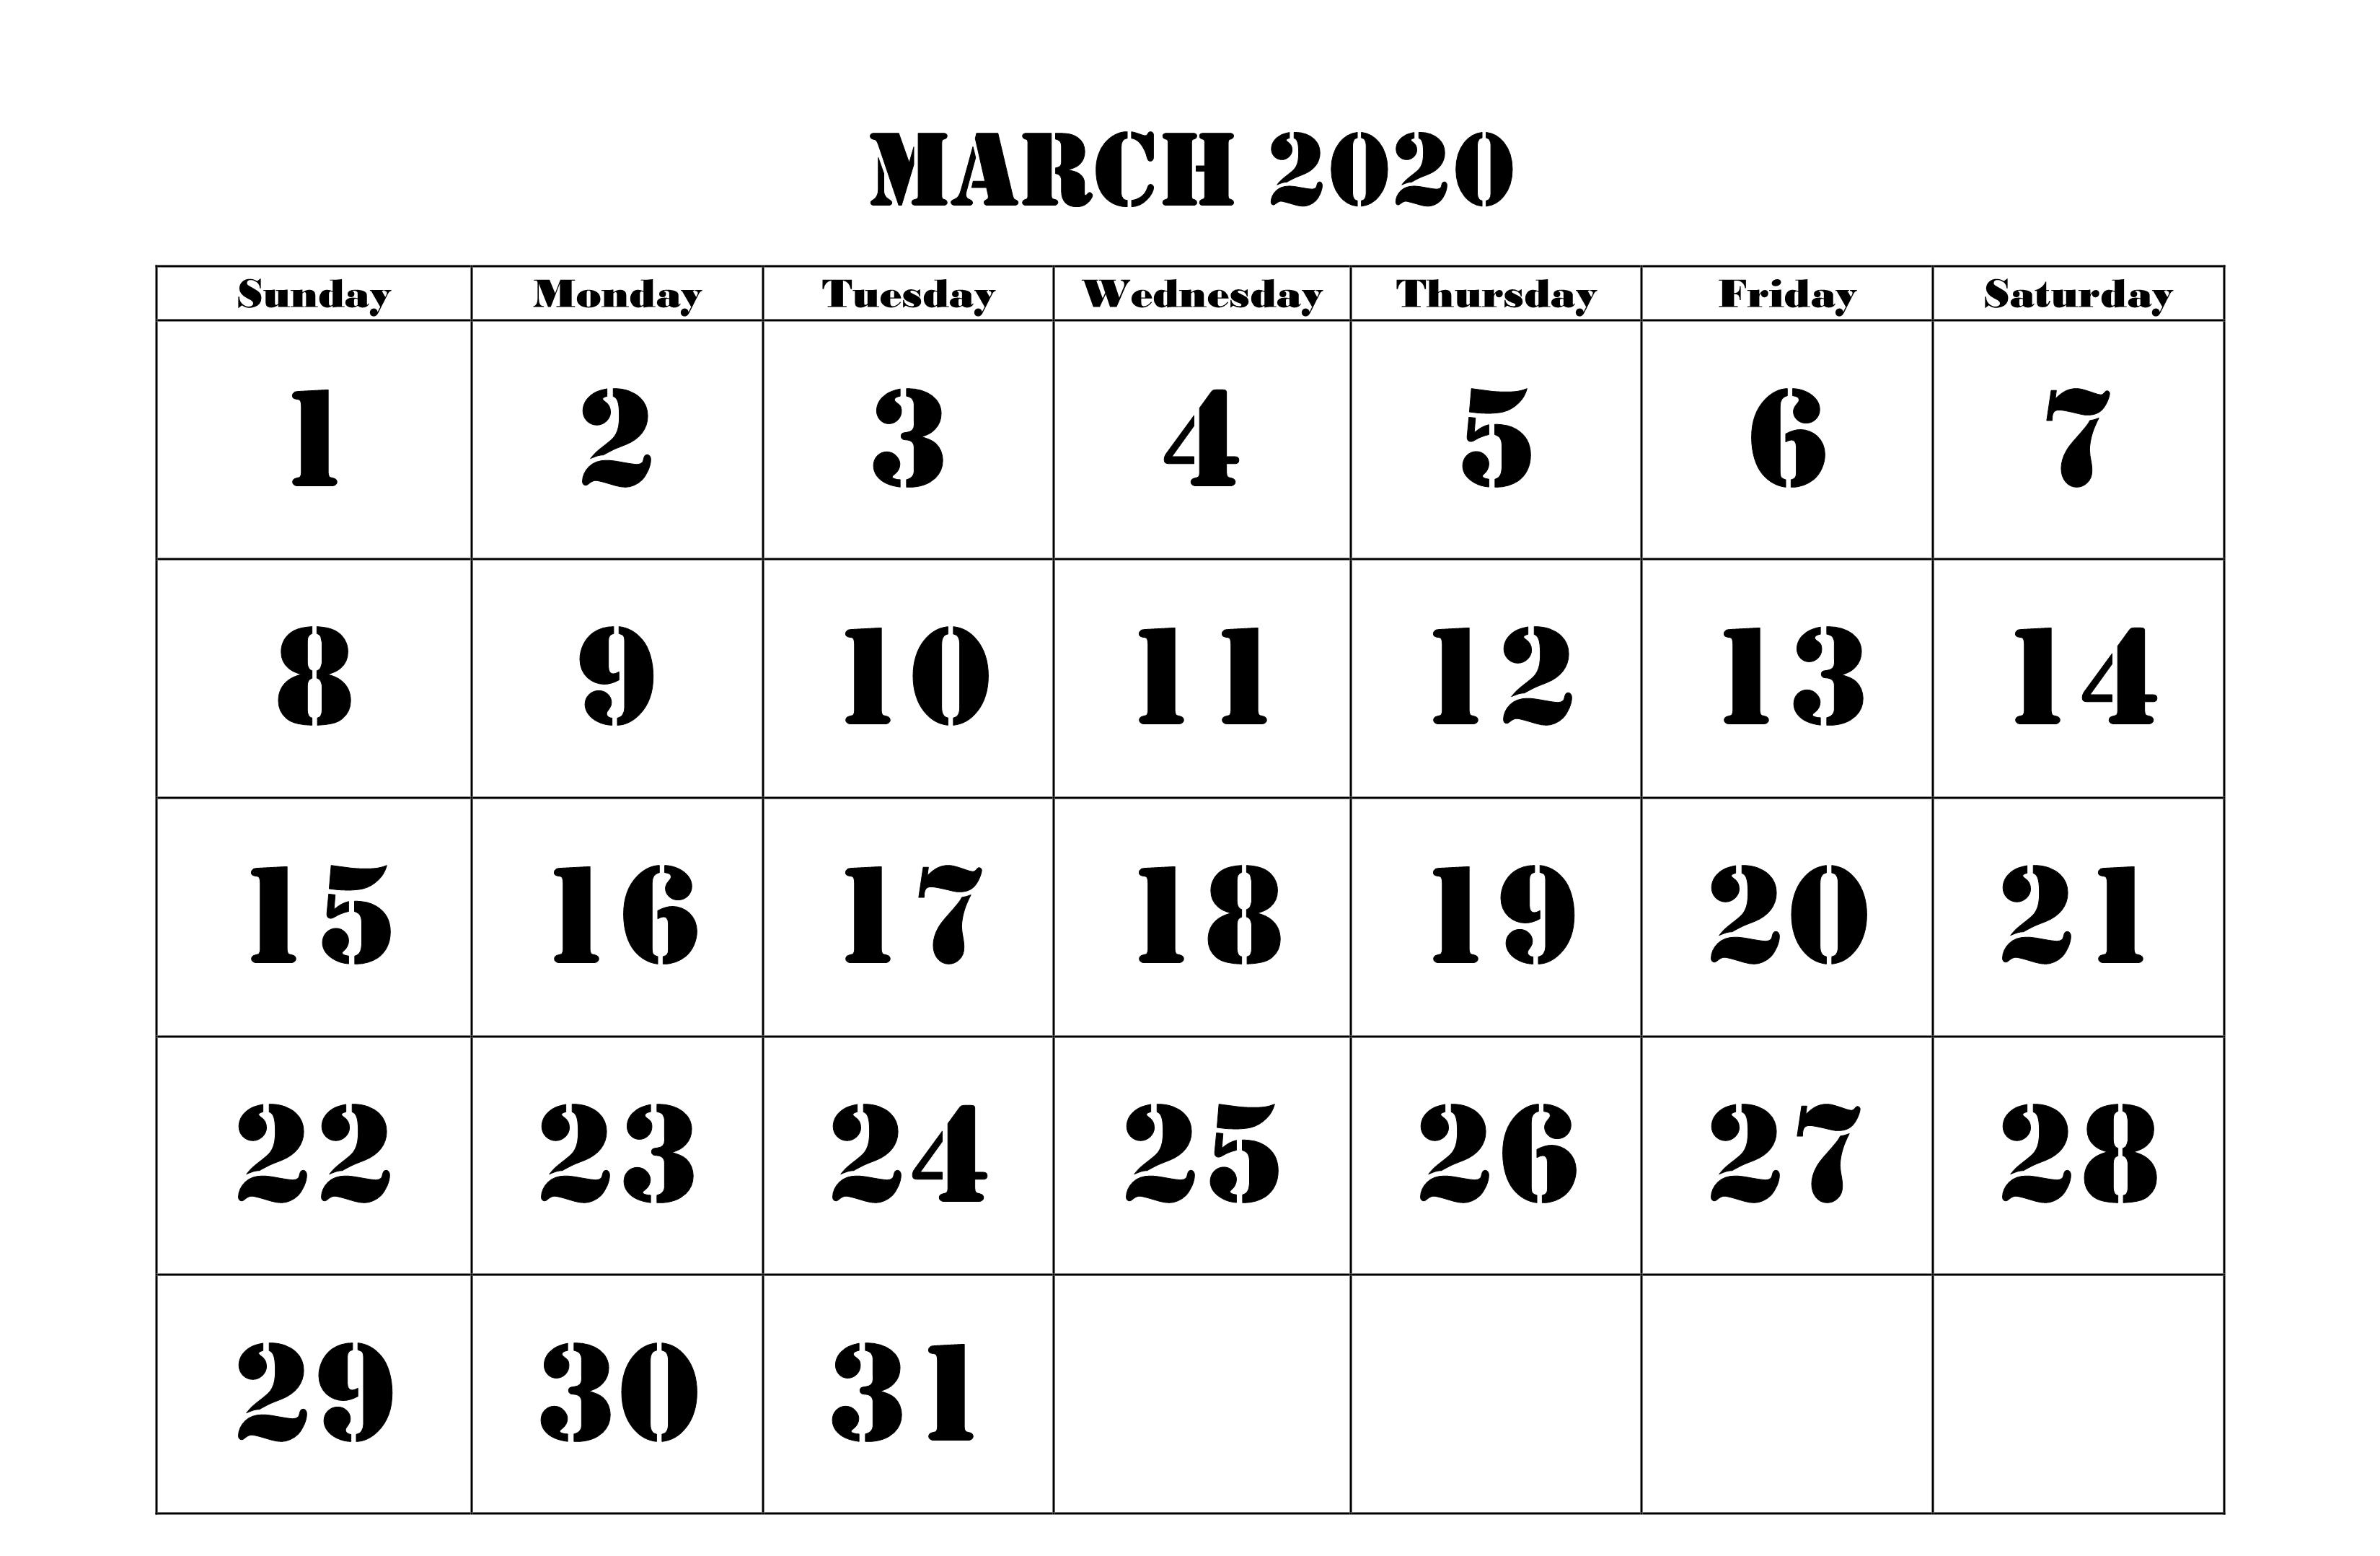 March 2020 Calendar Wallpapers Wallpaper Cave